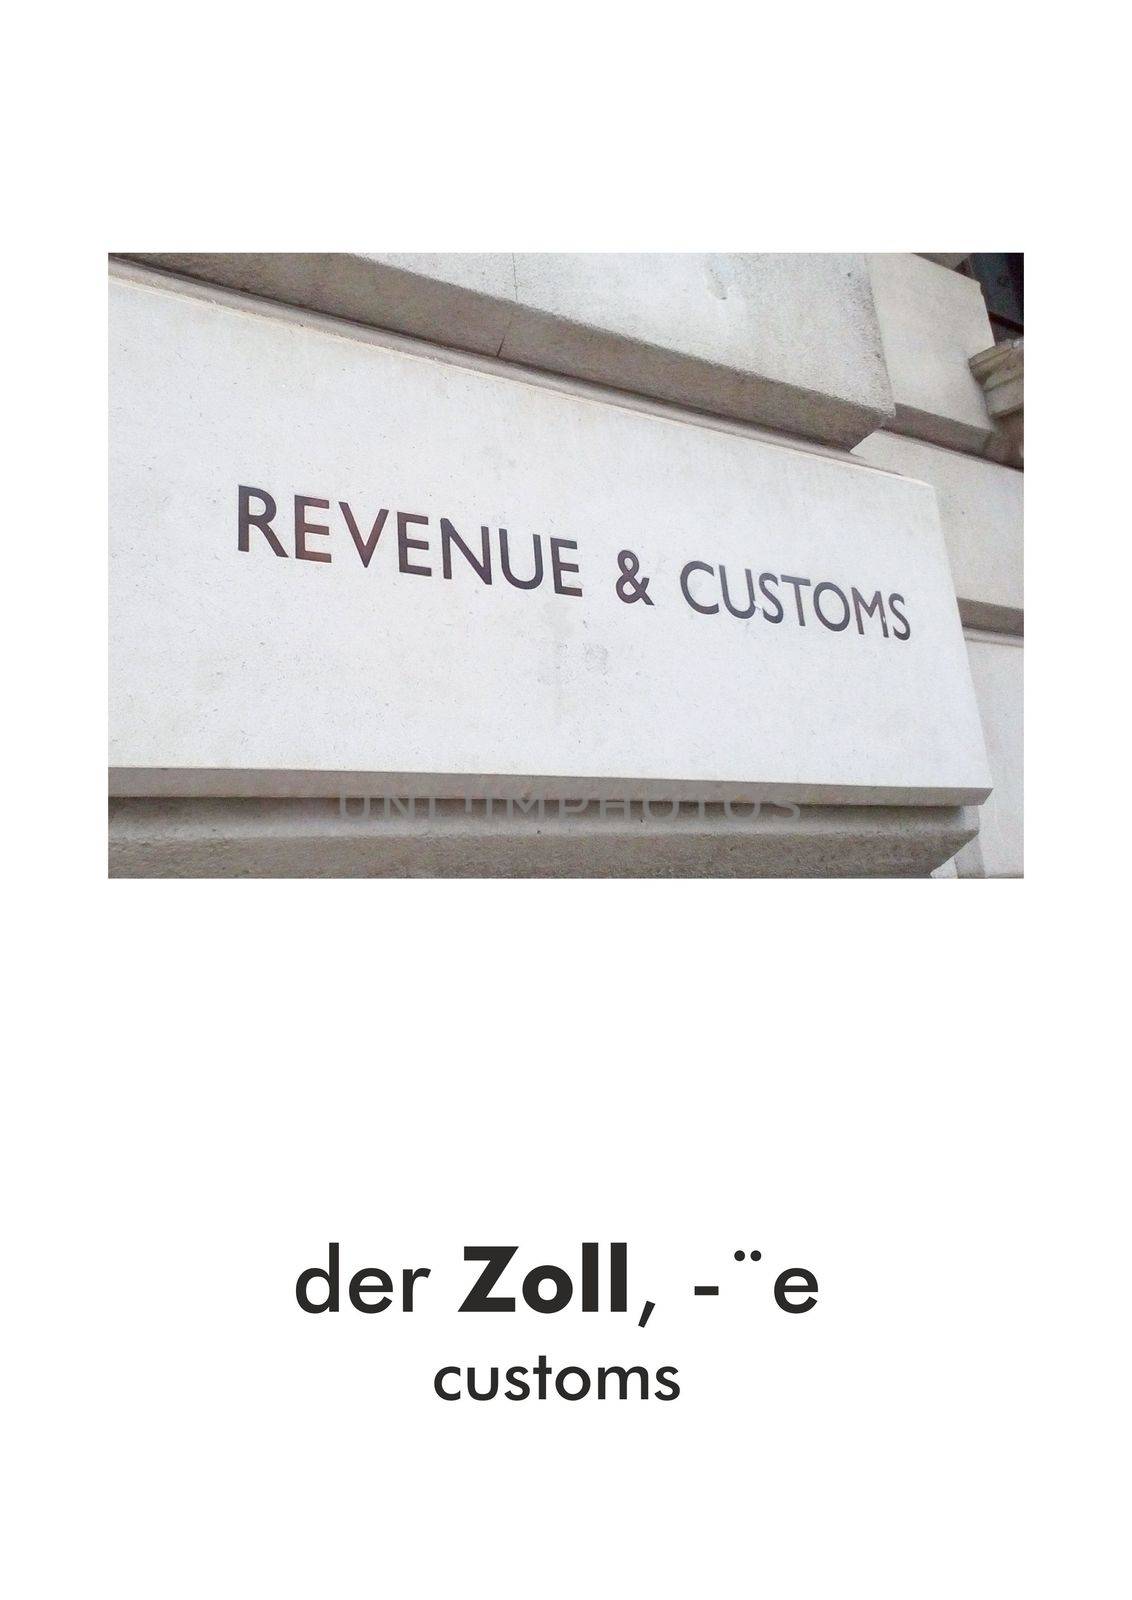 German word card: der Zoll (customs)